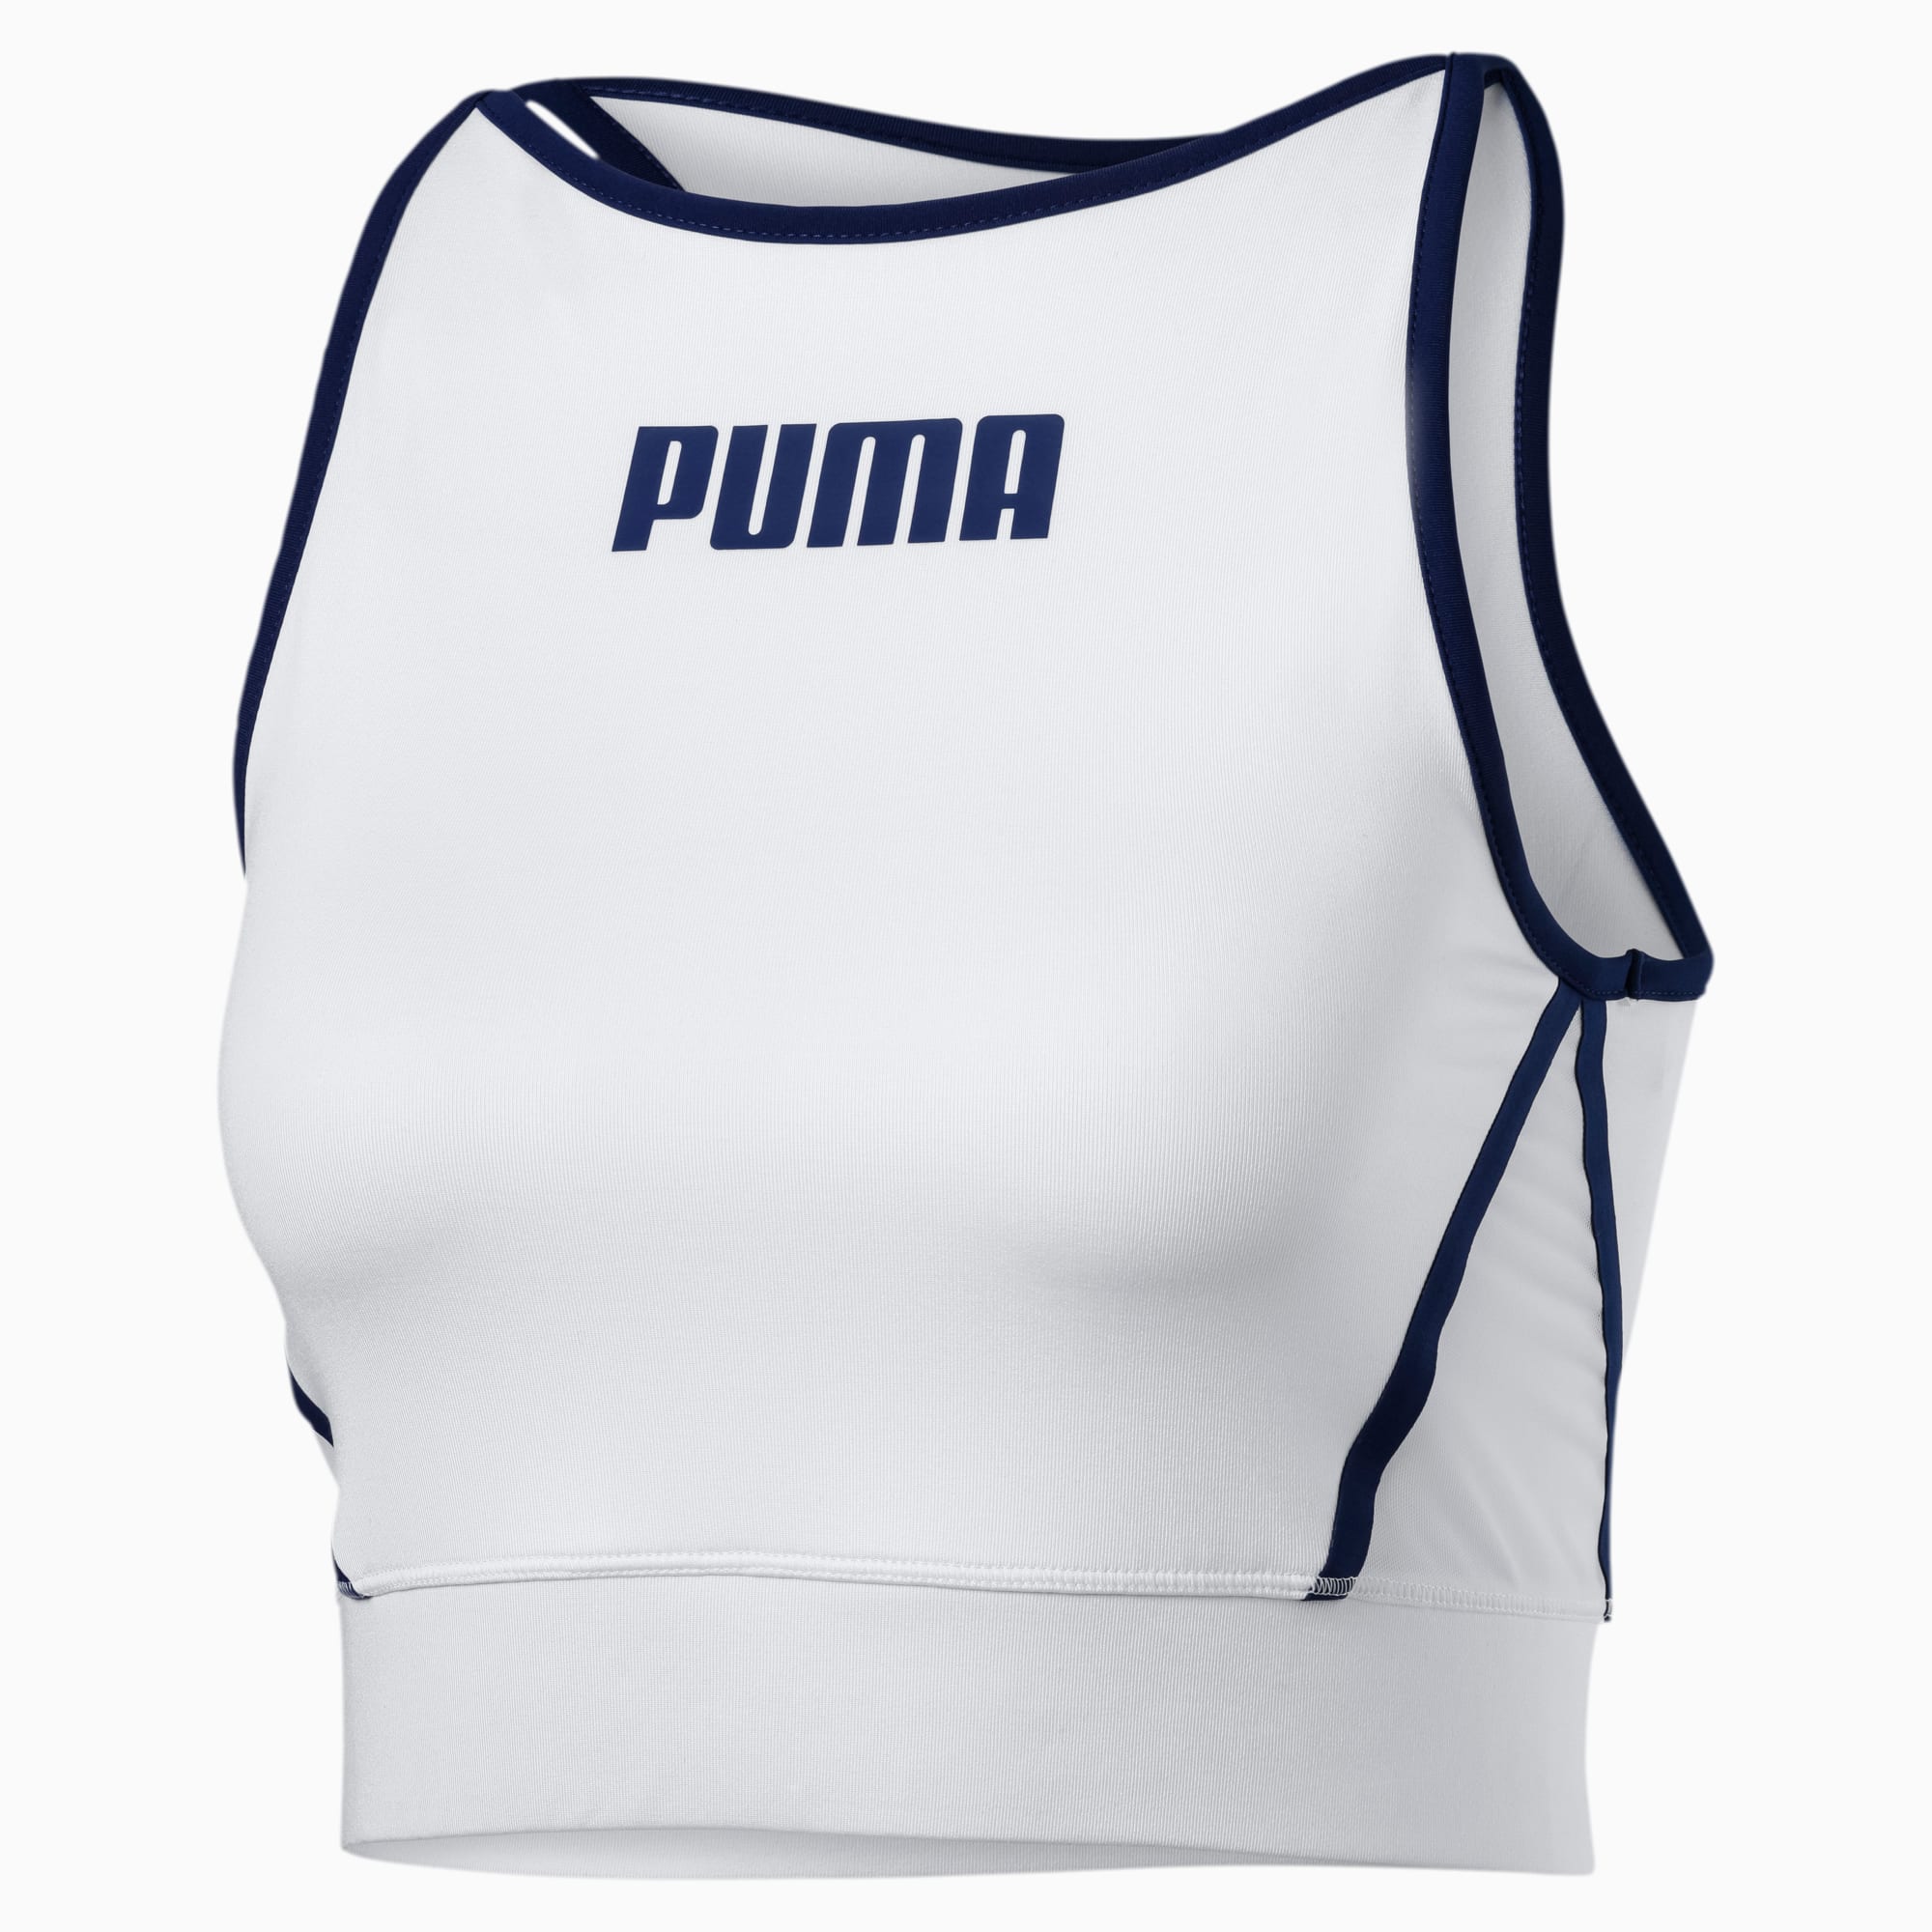 PUMA x PAMELA REIF Women's Bra Top 